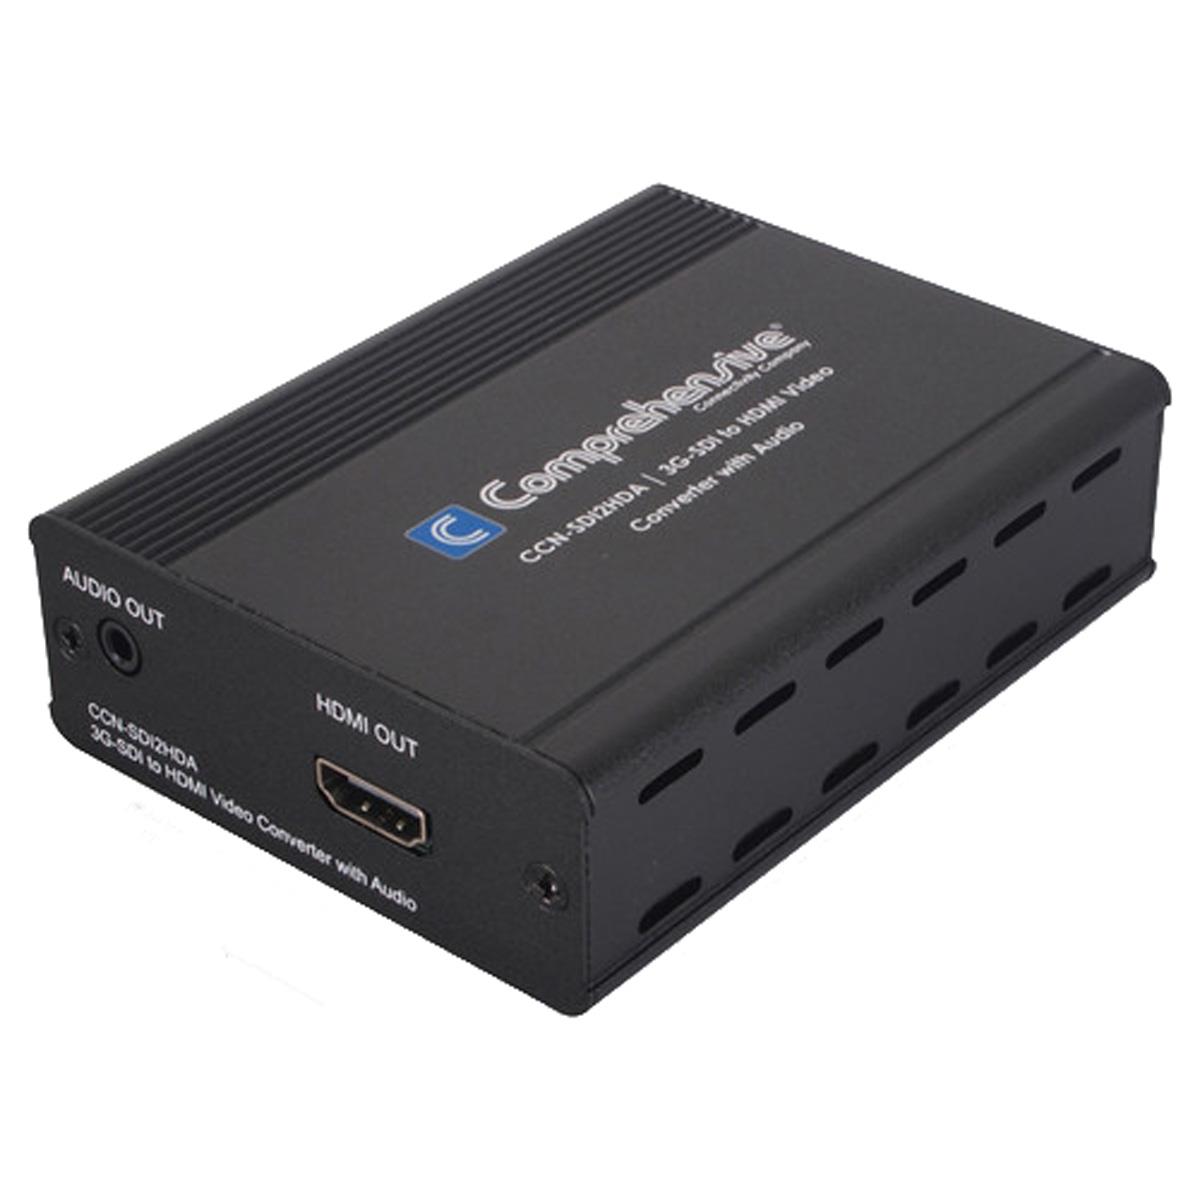 

Comprehensive Pro AV/IT 3G-SDI to HDMI Video Converter with Audio